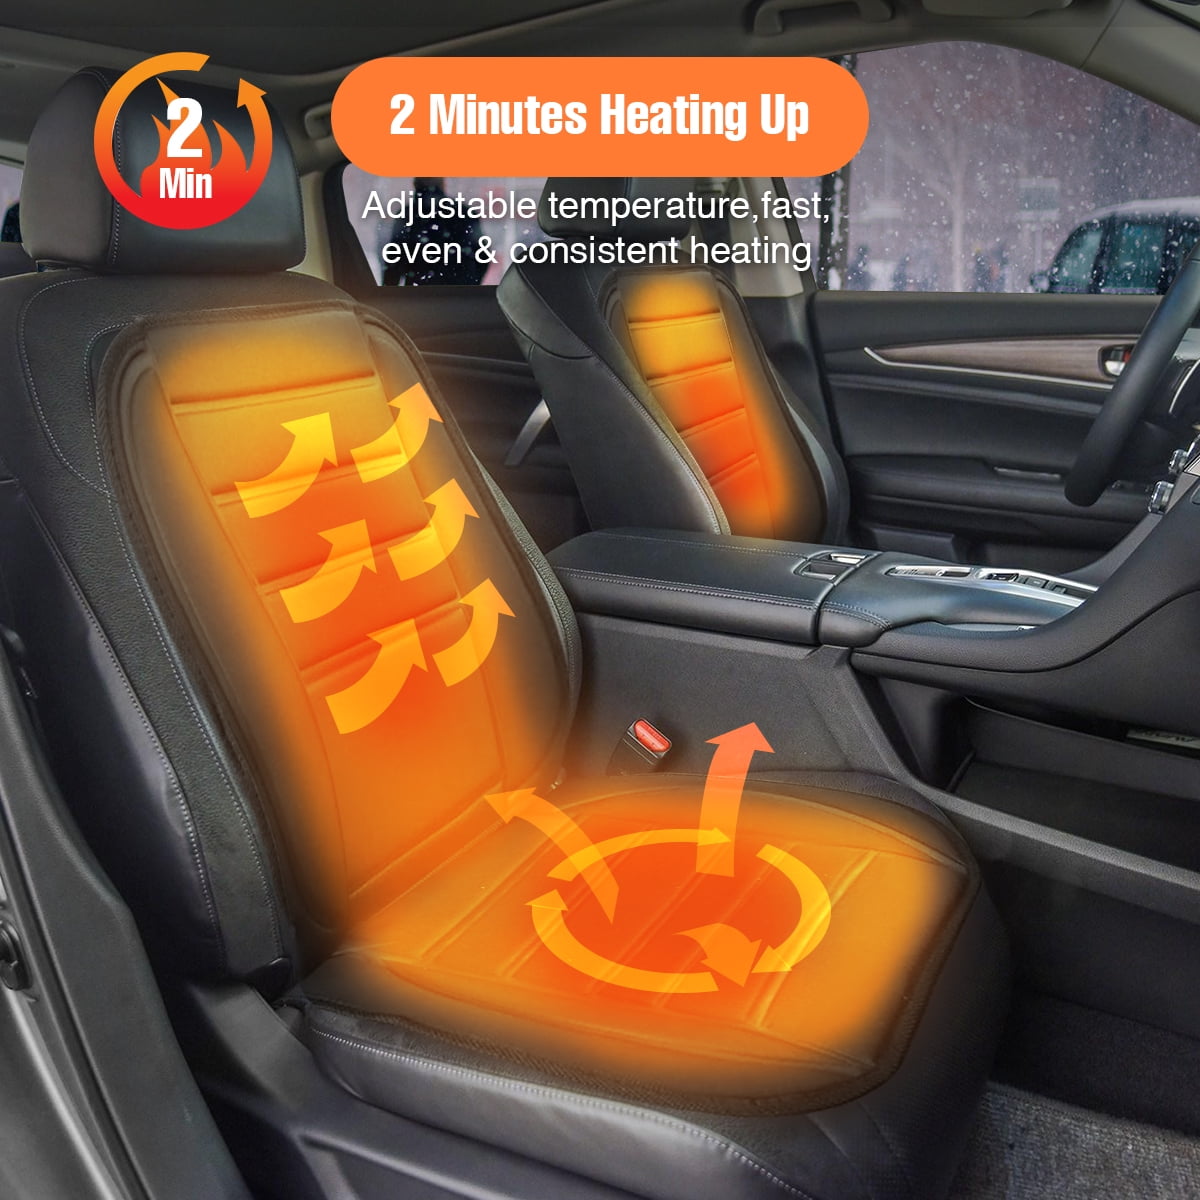 ANJUNY 12 / 24V Car Electric Heated Seat Cushion Warm Plush Seat Heating Pad  with Backrest - Grey / Driver Side